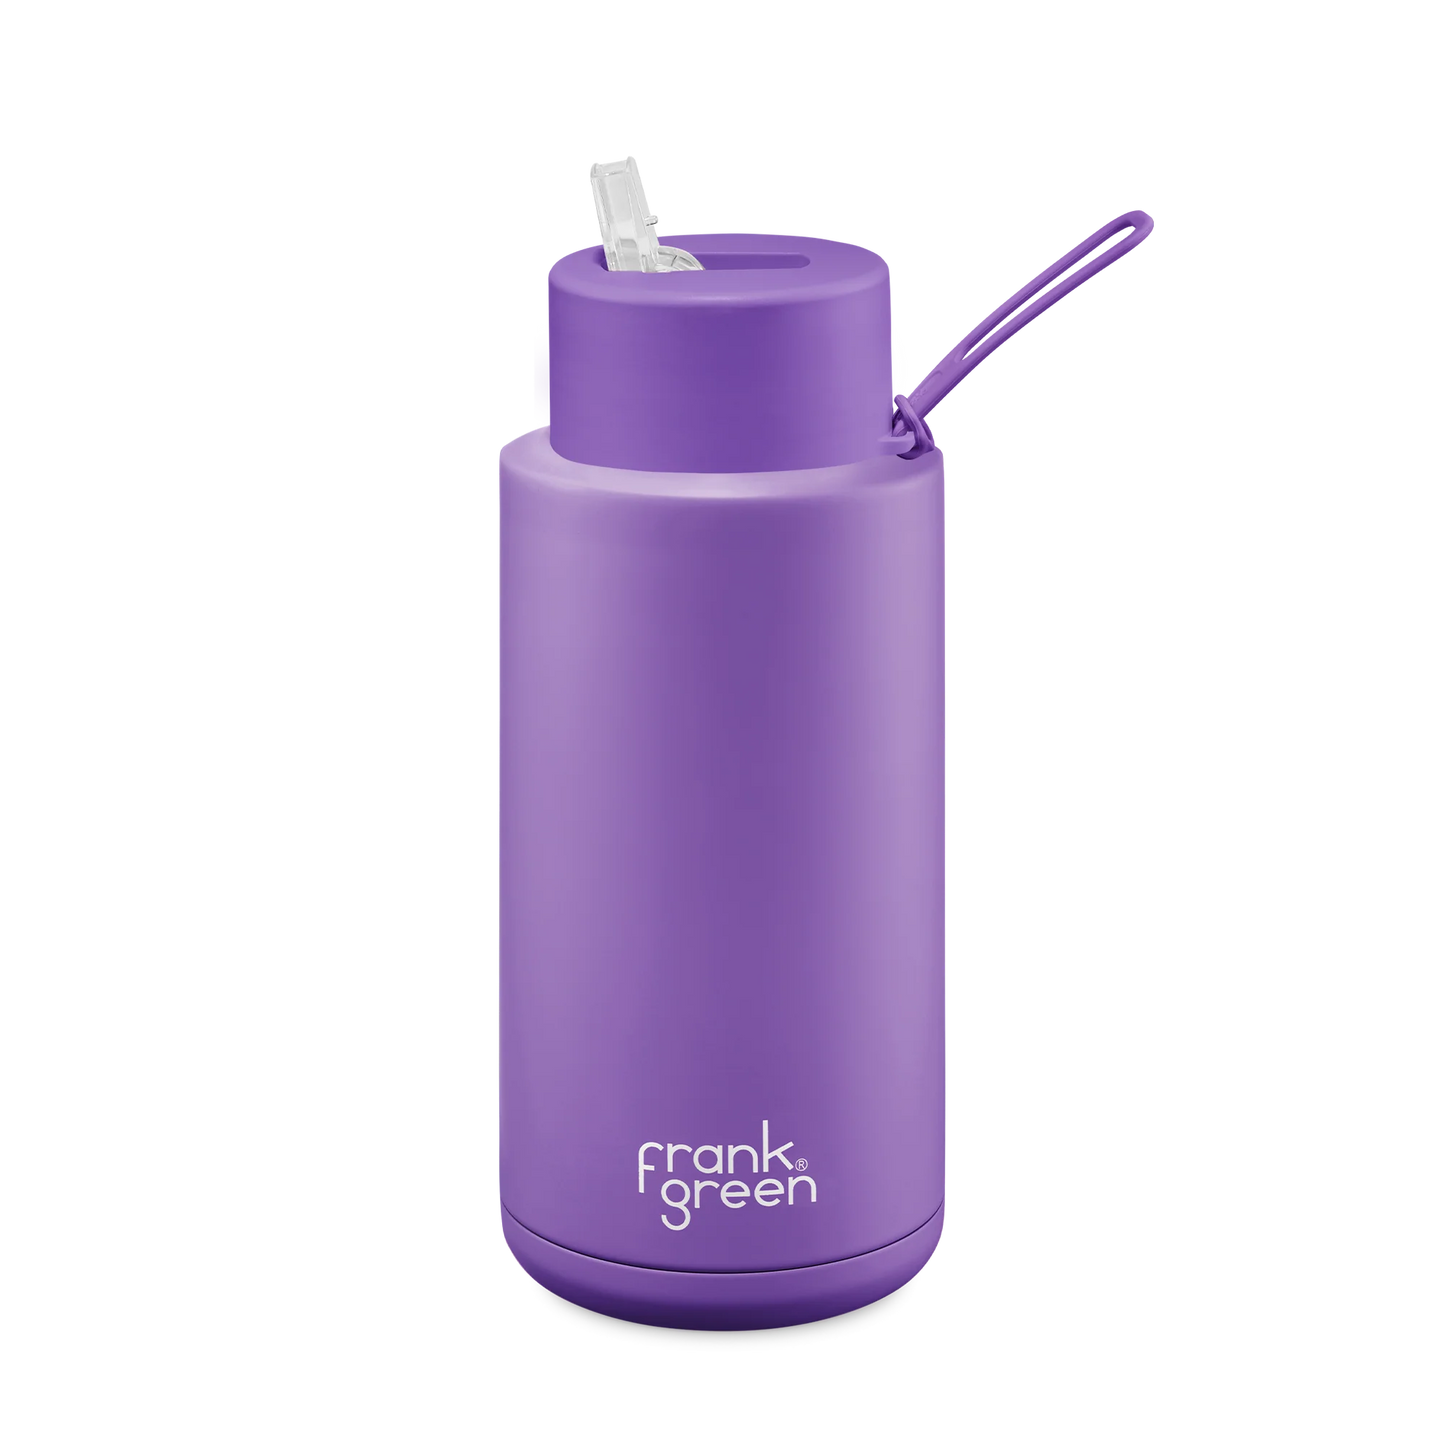 1L Ceramic Reusable Bottle - Cosmic Purple